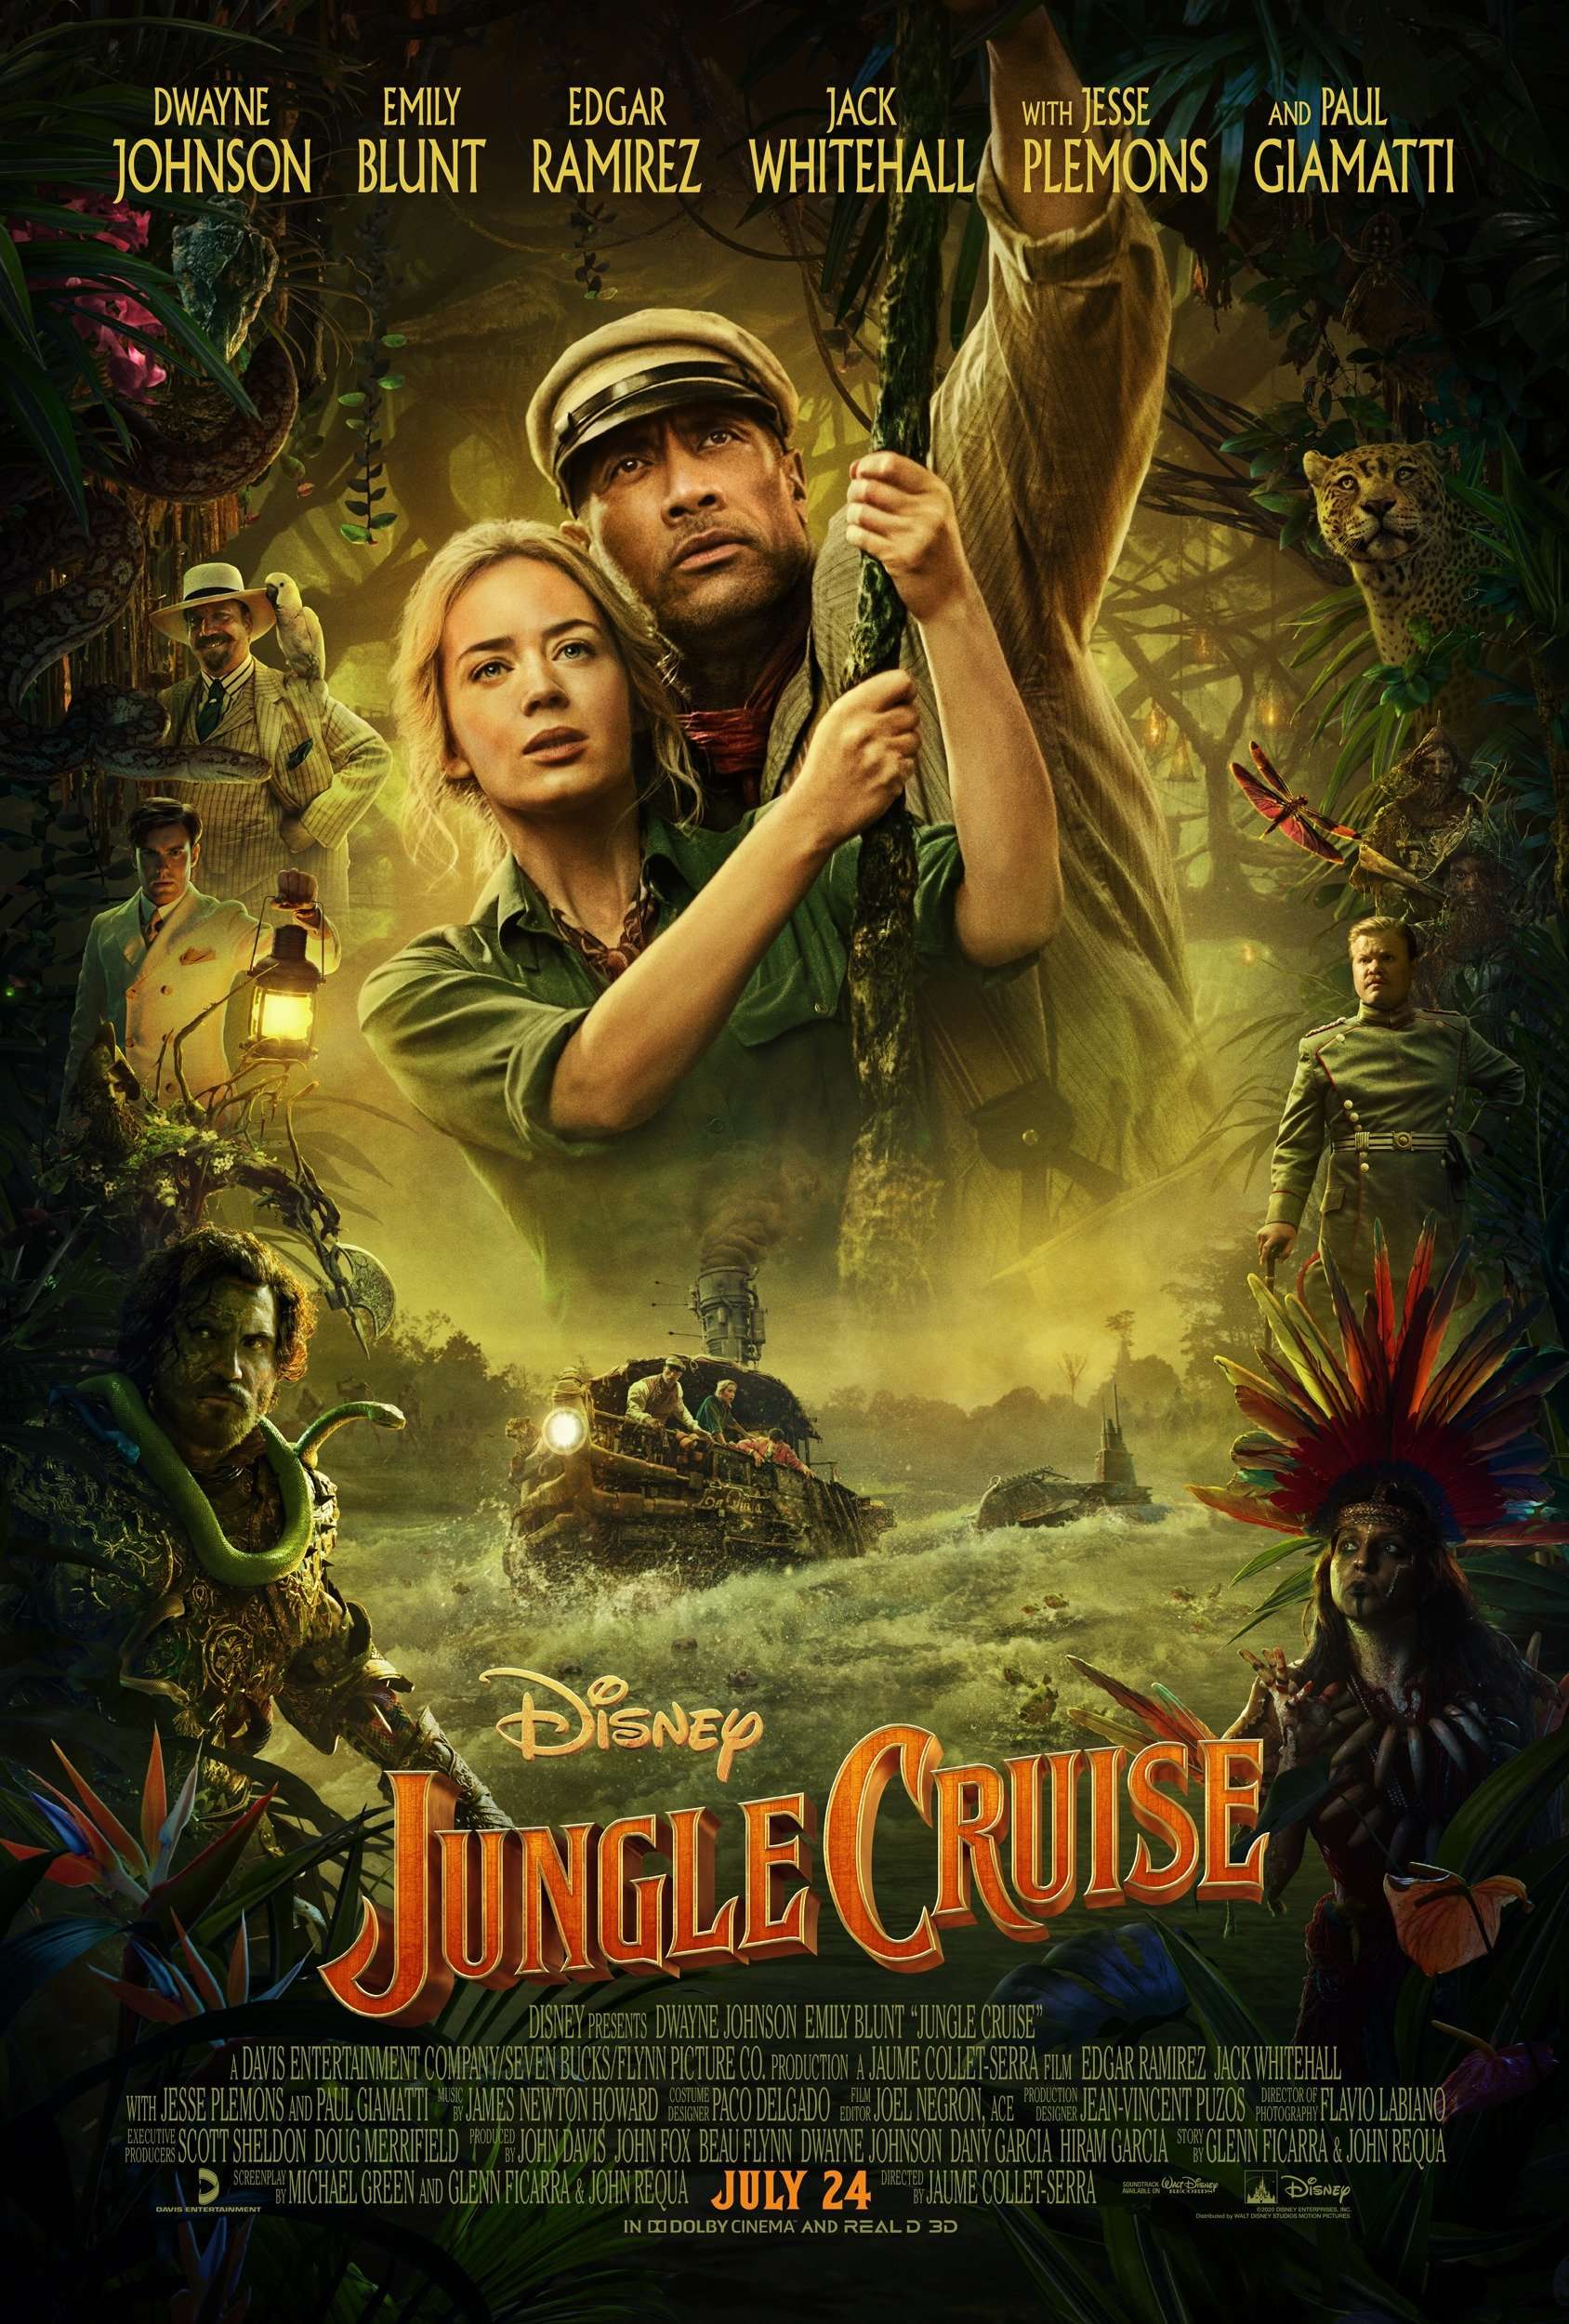 Jungle Cruise (2020 film)